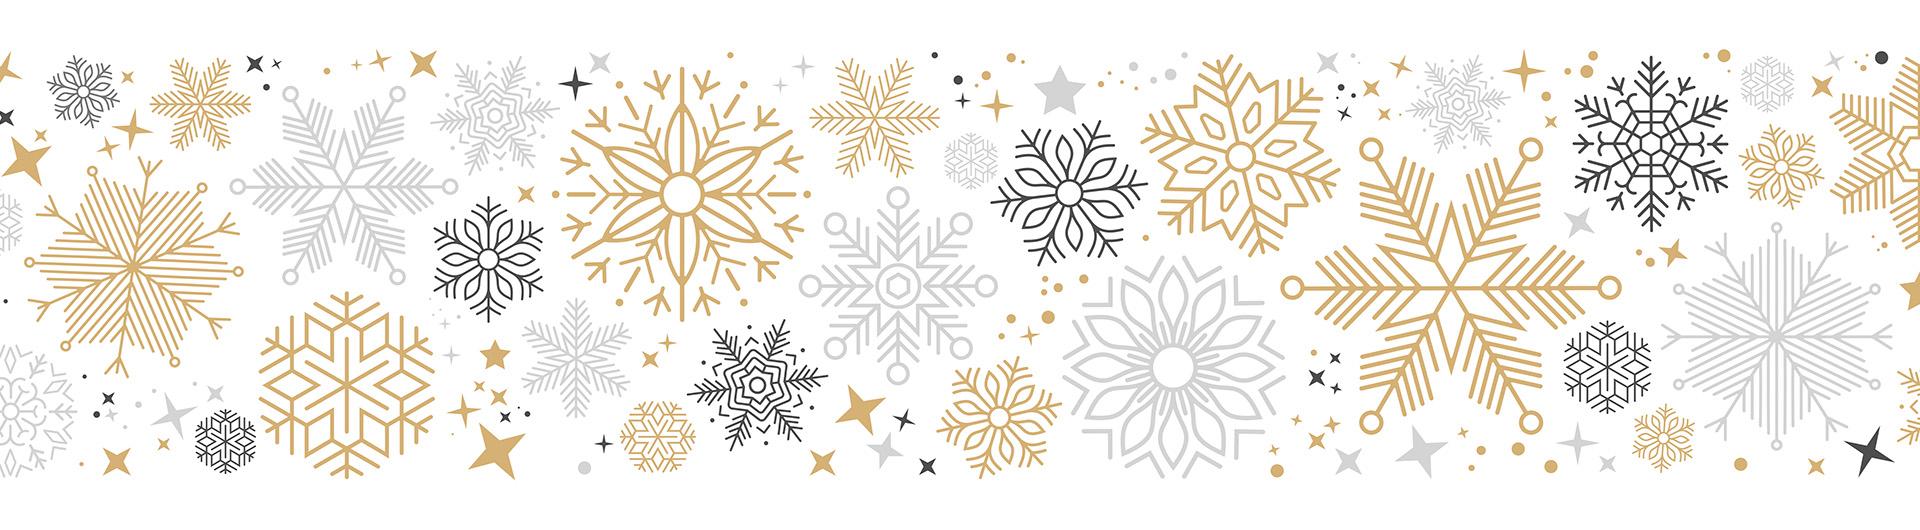 stylized snowflakes